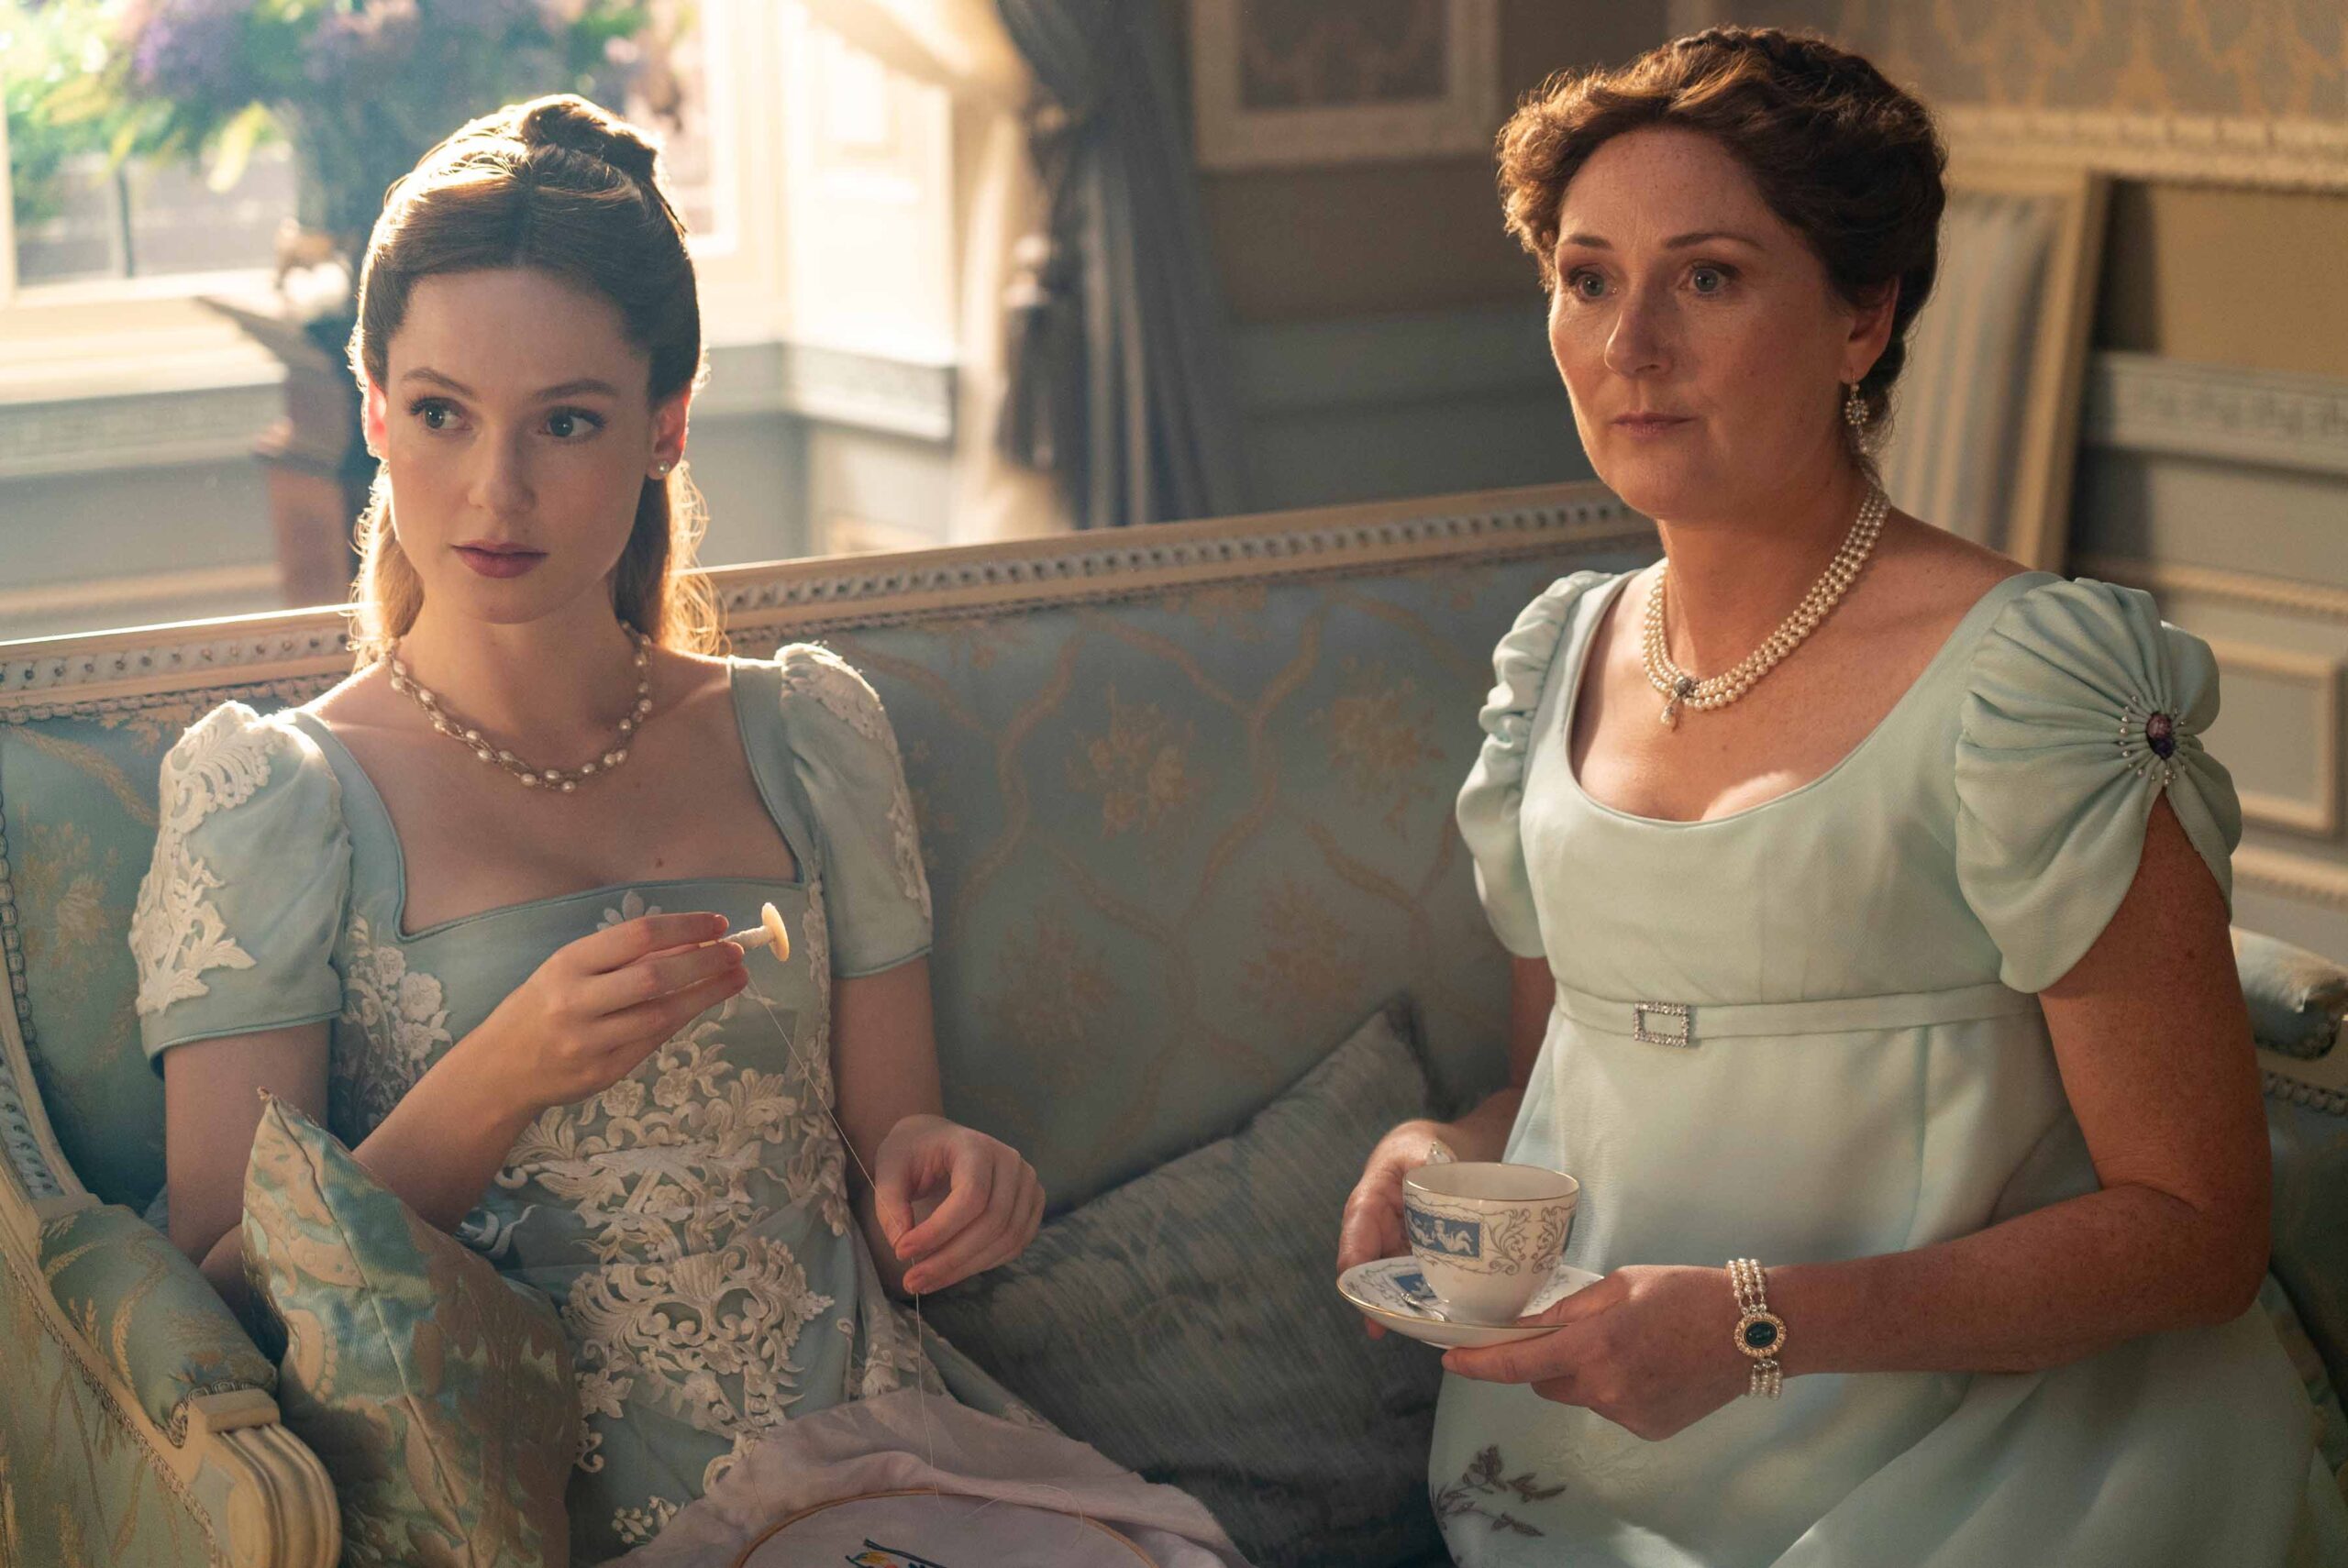 Will Lord Kilmartin marry Francesca Bridgerton in season 3?